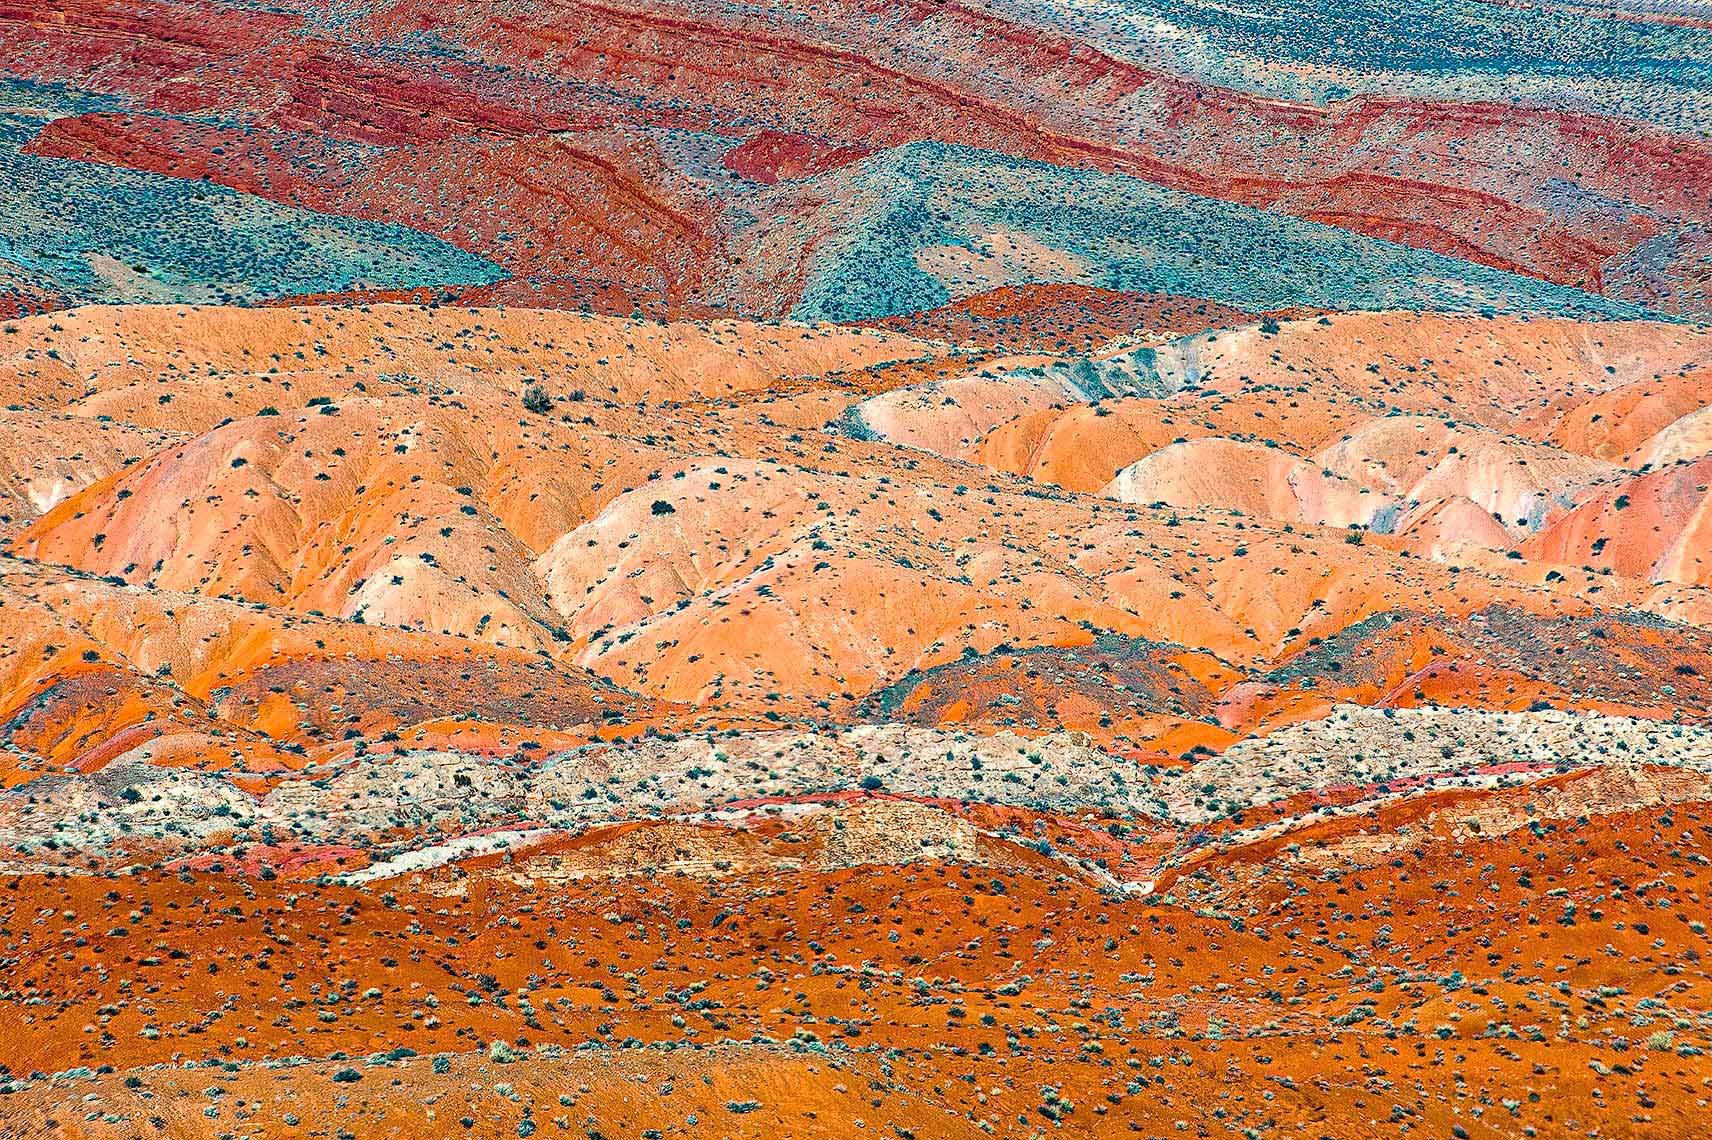 Landscape Photography Rocks Arizona